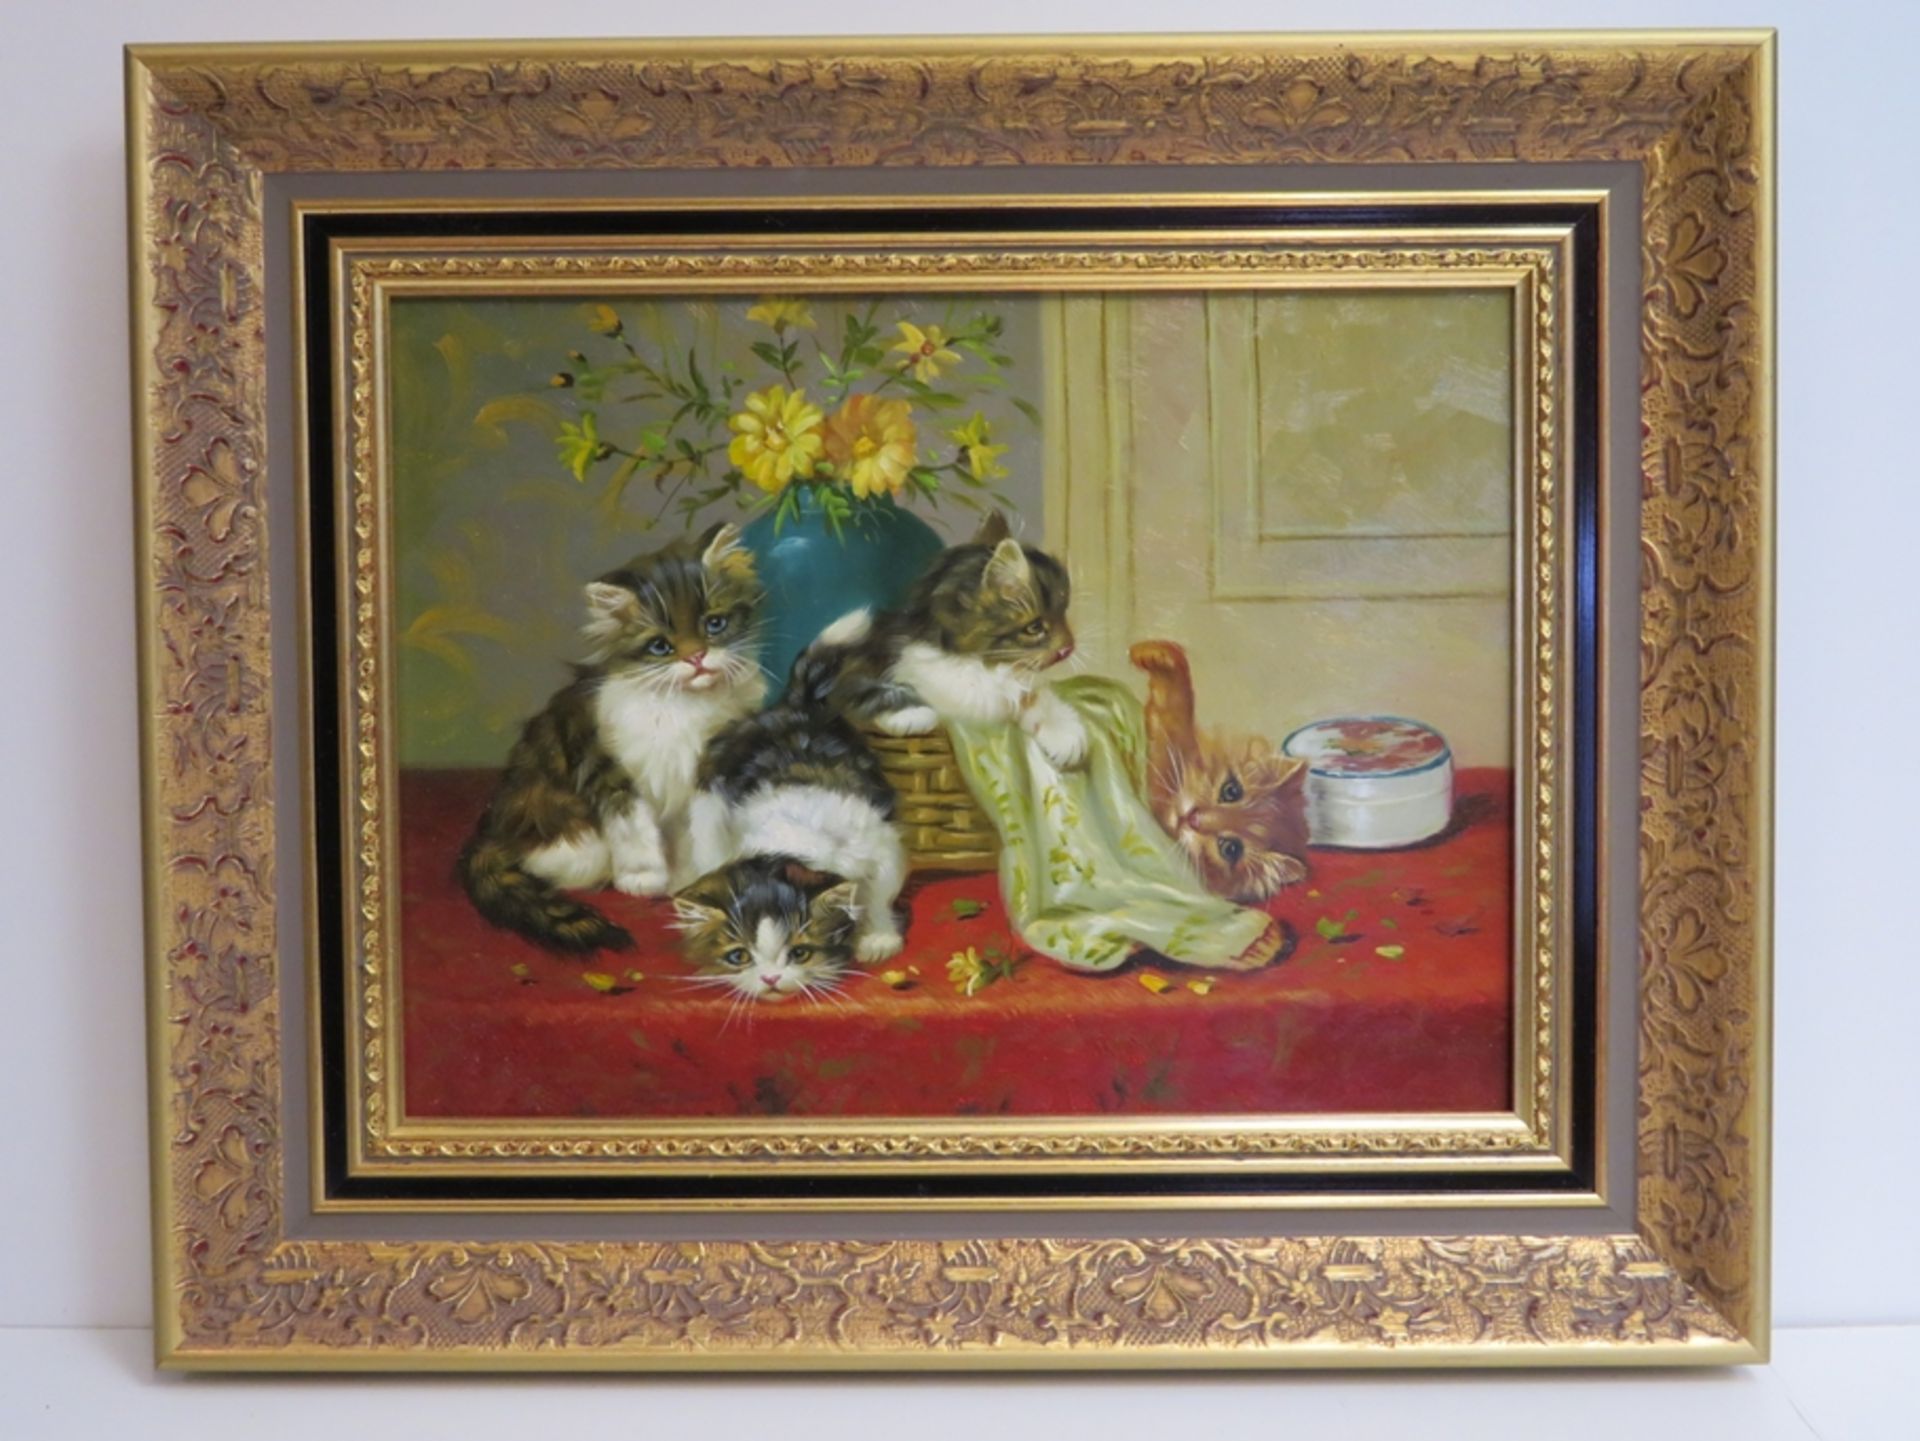 Unbekannt, "Drei spielende Kätzchen", Öl/Holz, 30,5 x 40 cm, vergoldeter Stuckrahmen [44 x 54 cm] - Image 2 of 2